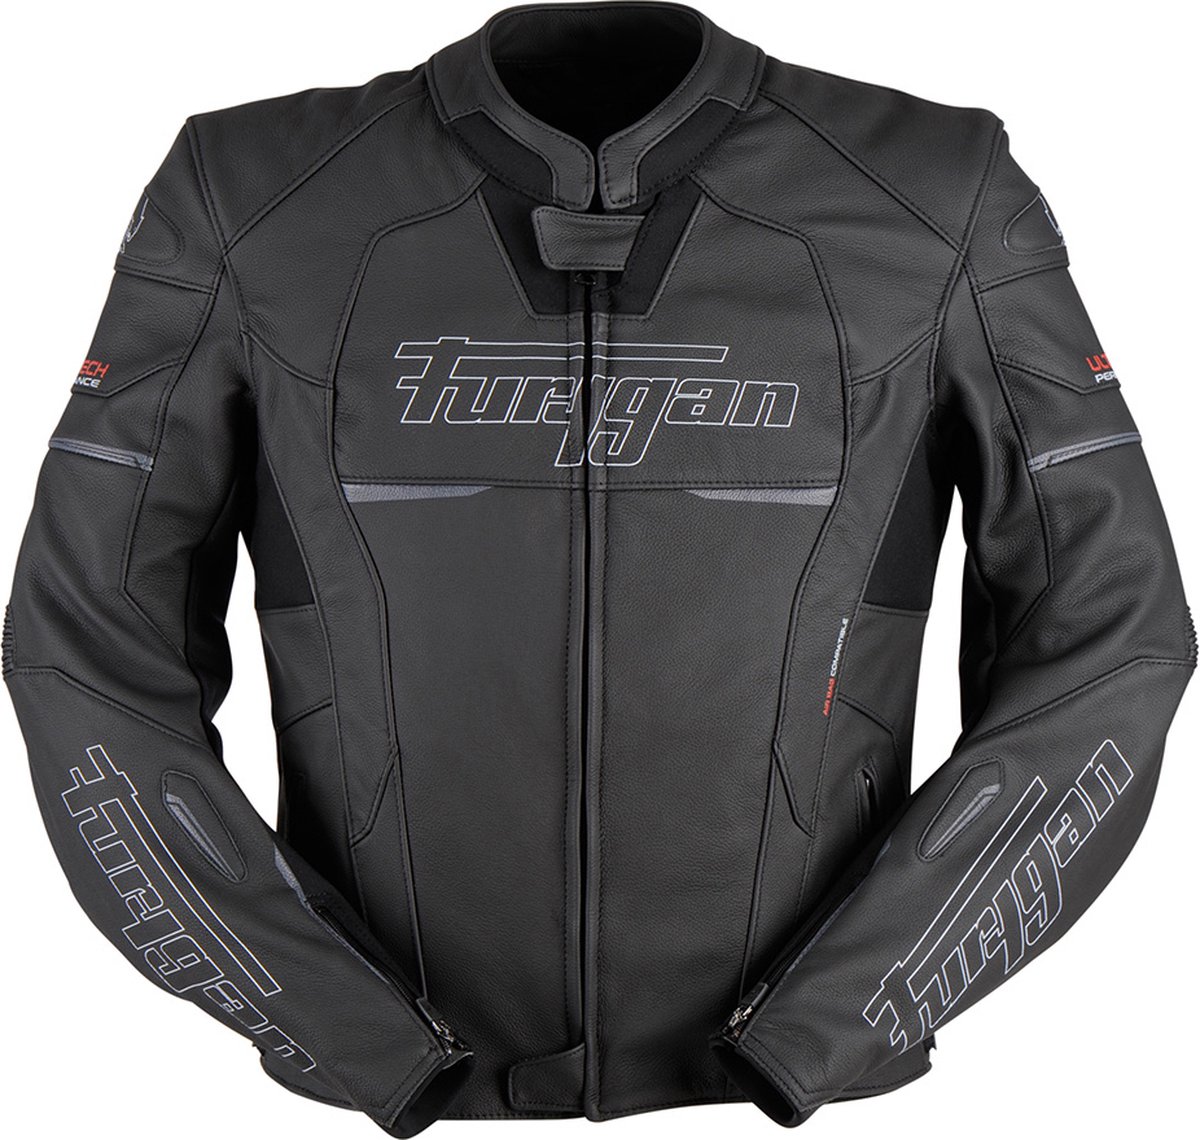 Furygan Nitros Black White Motorcycle Jacket 3XL